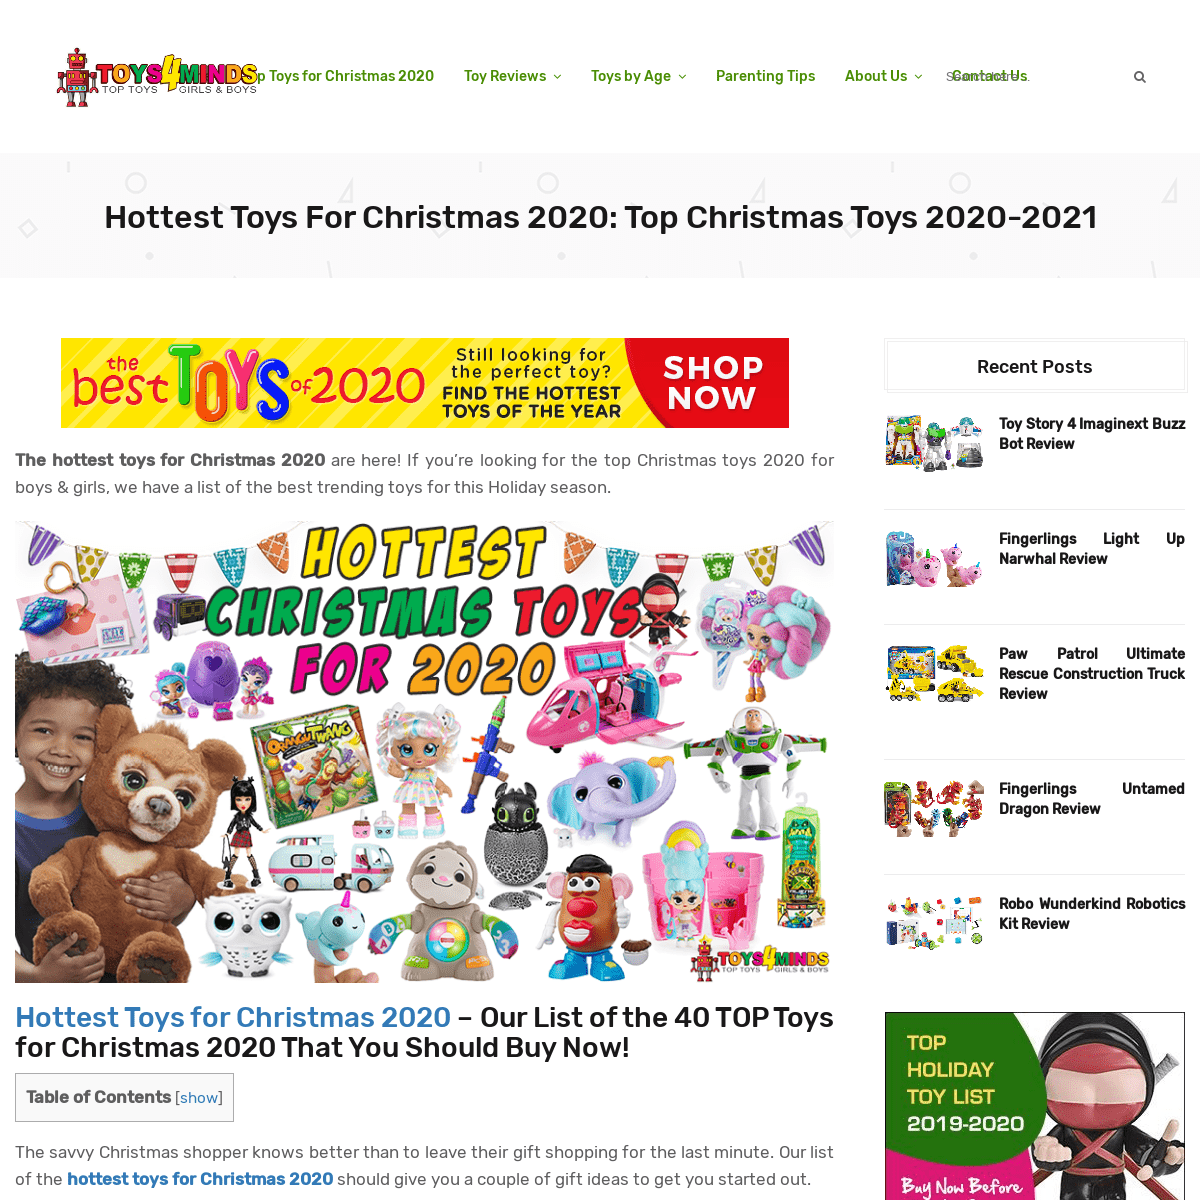 A complete backup of toys4minds.com